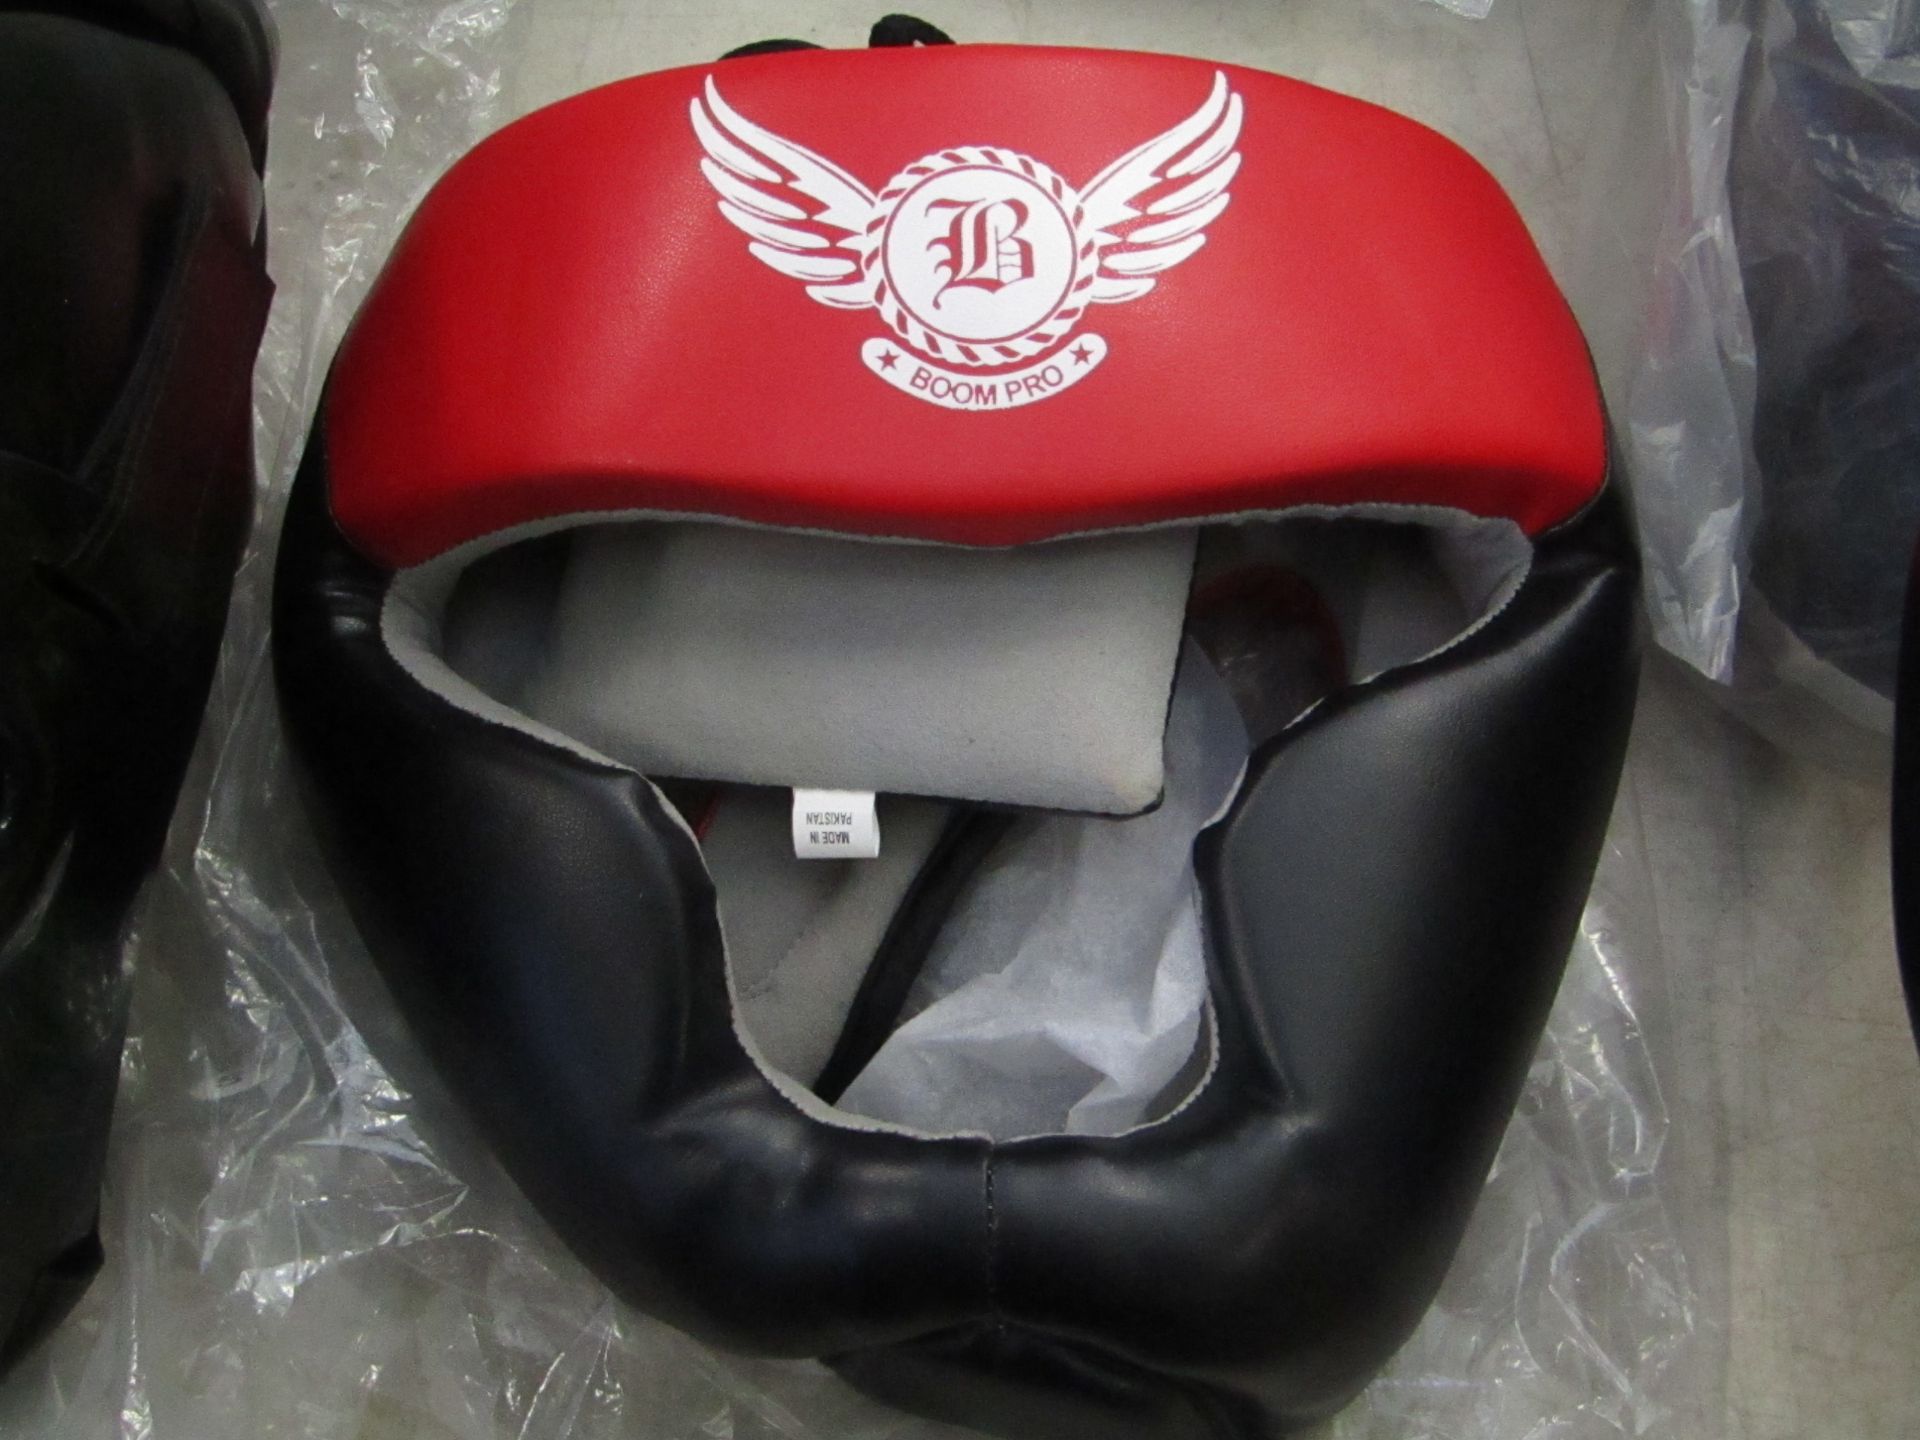 Boom Pro Leather Head Guard size XL new